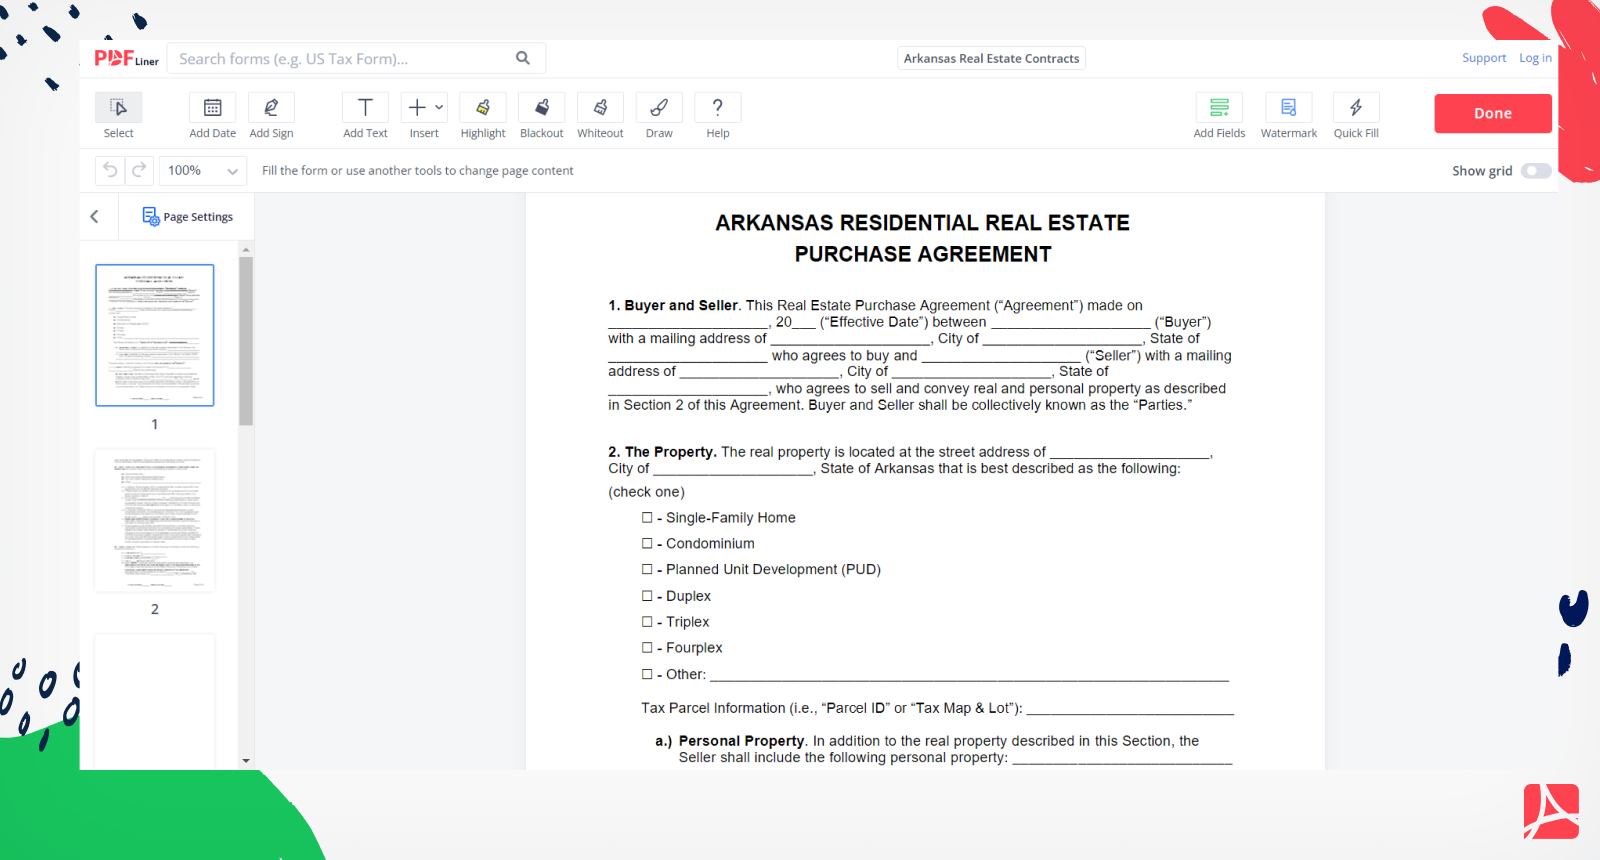 Arkansas Real Estate Contracts Form Screenshot